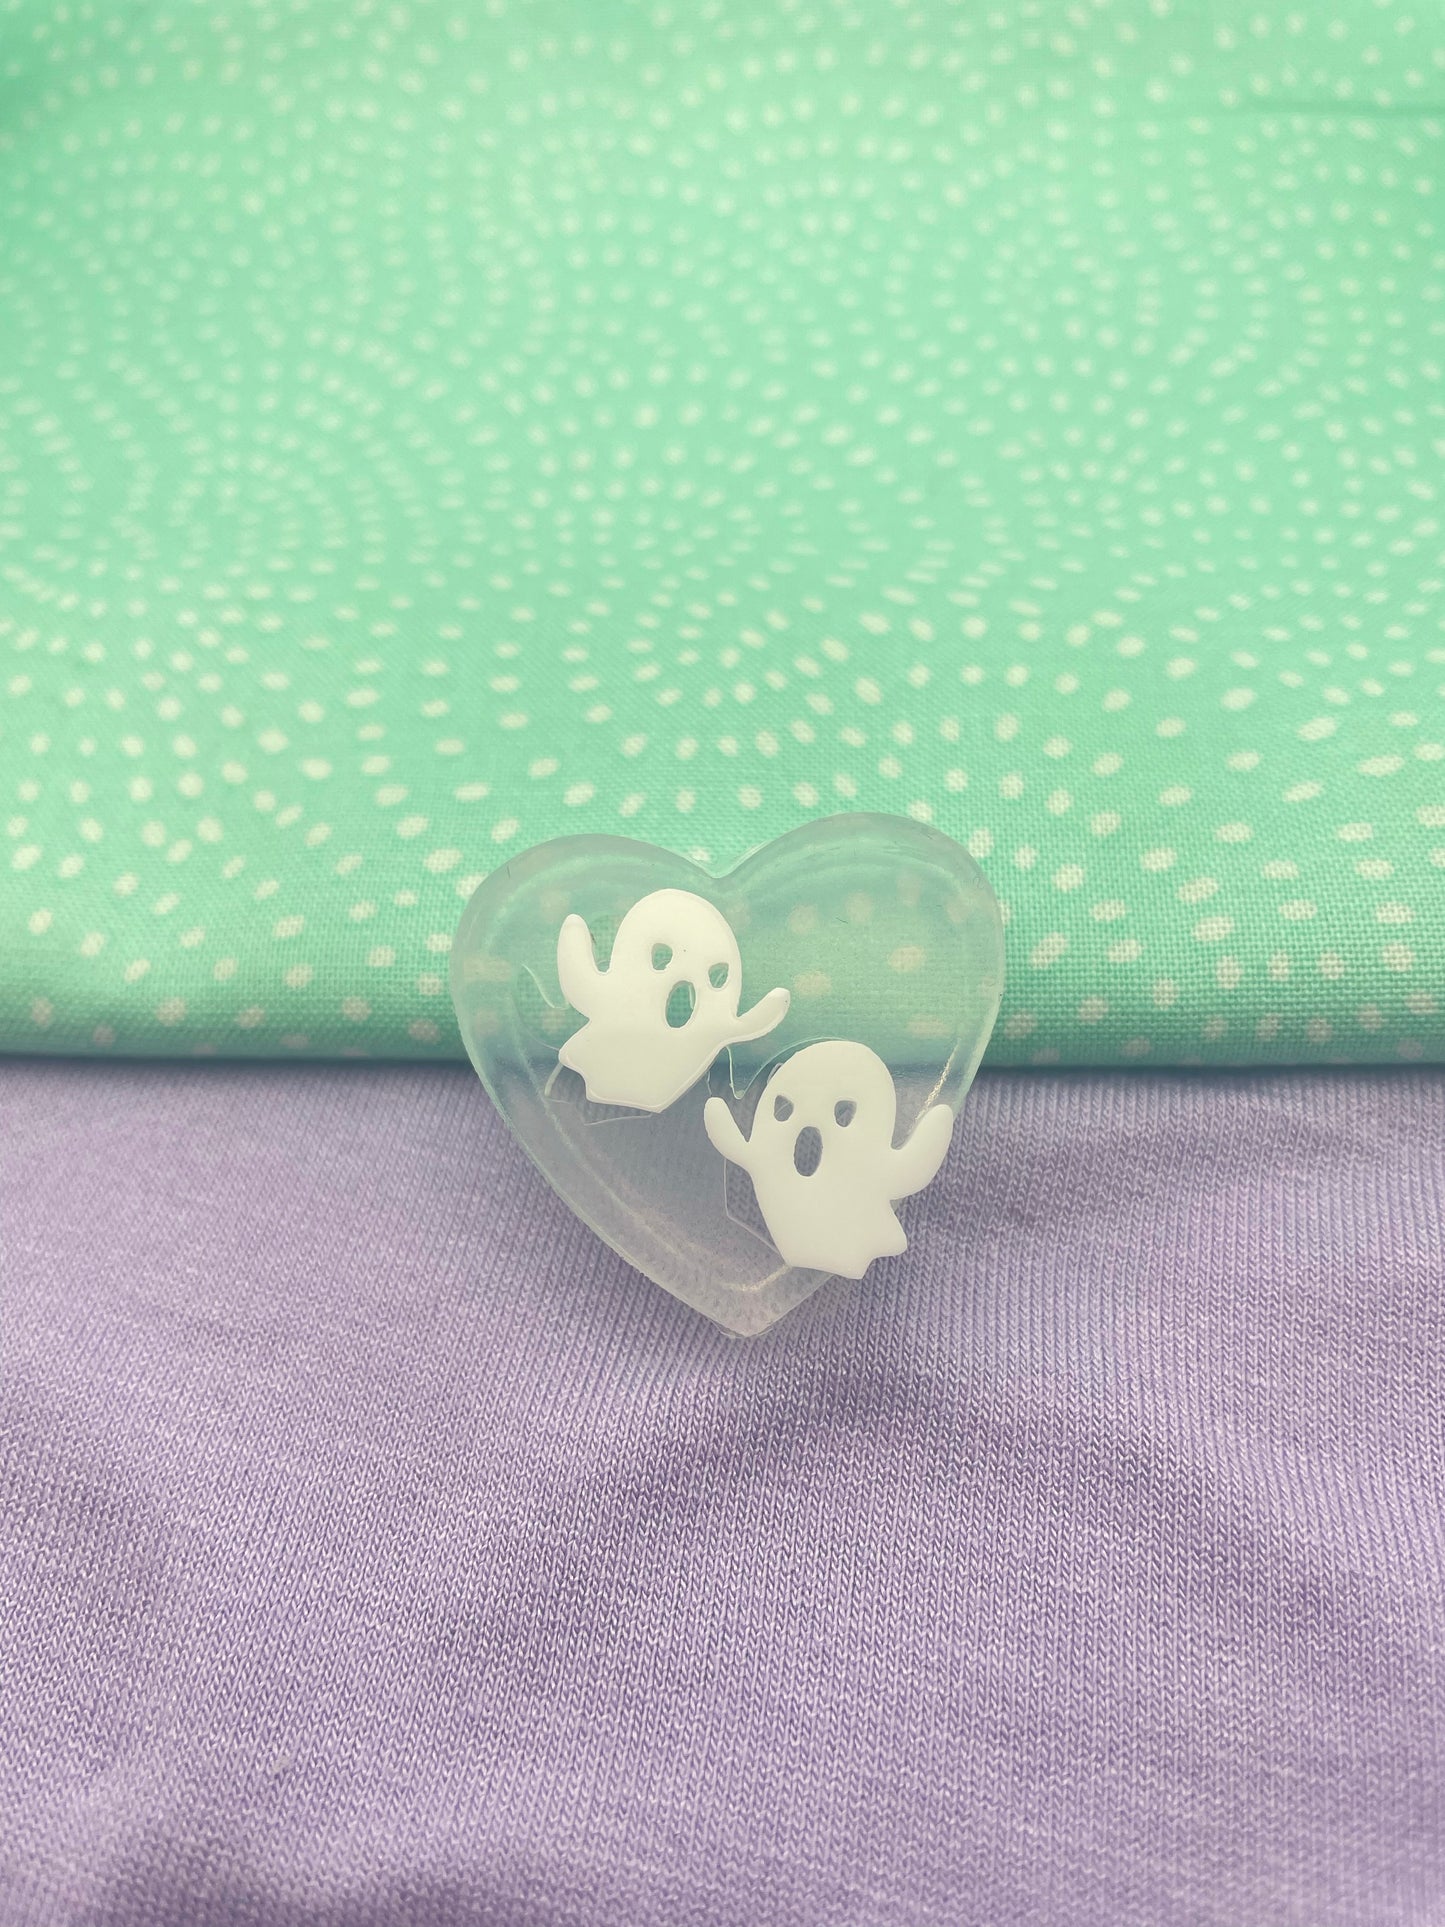 Mini Scary ghost stud earring mold Halloween